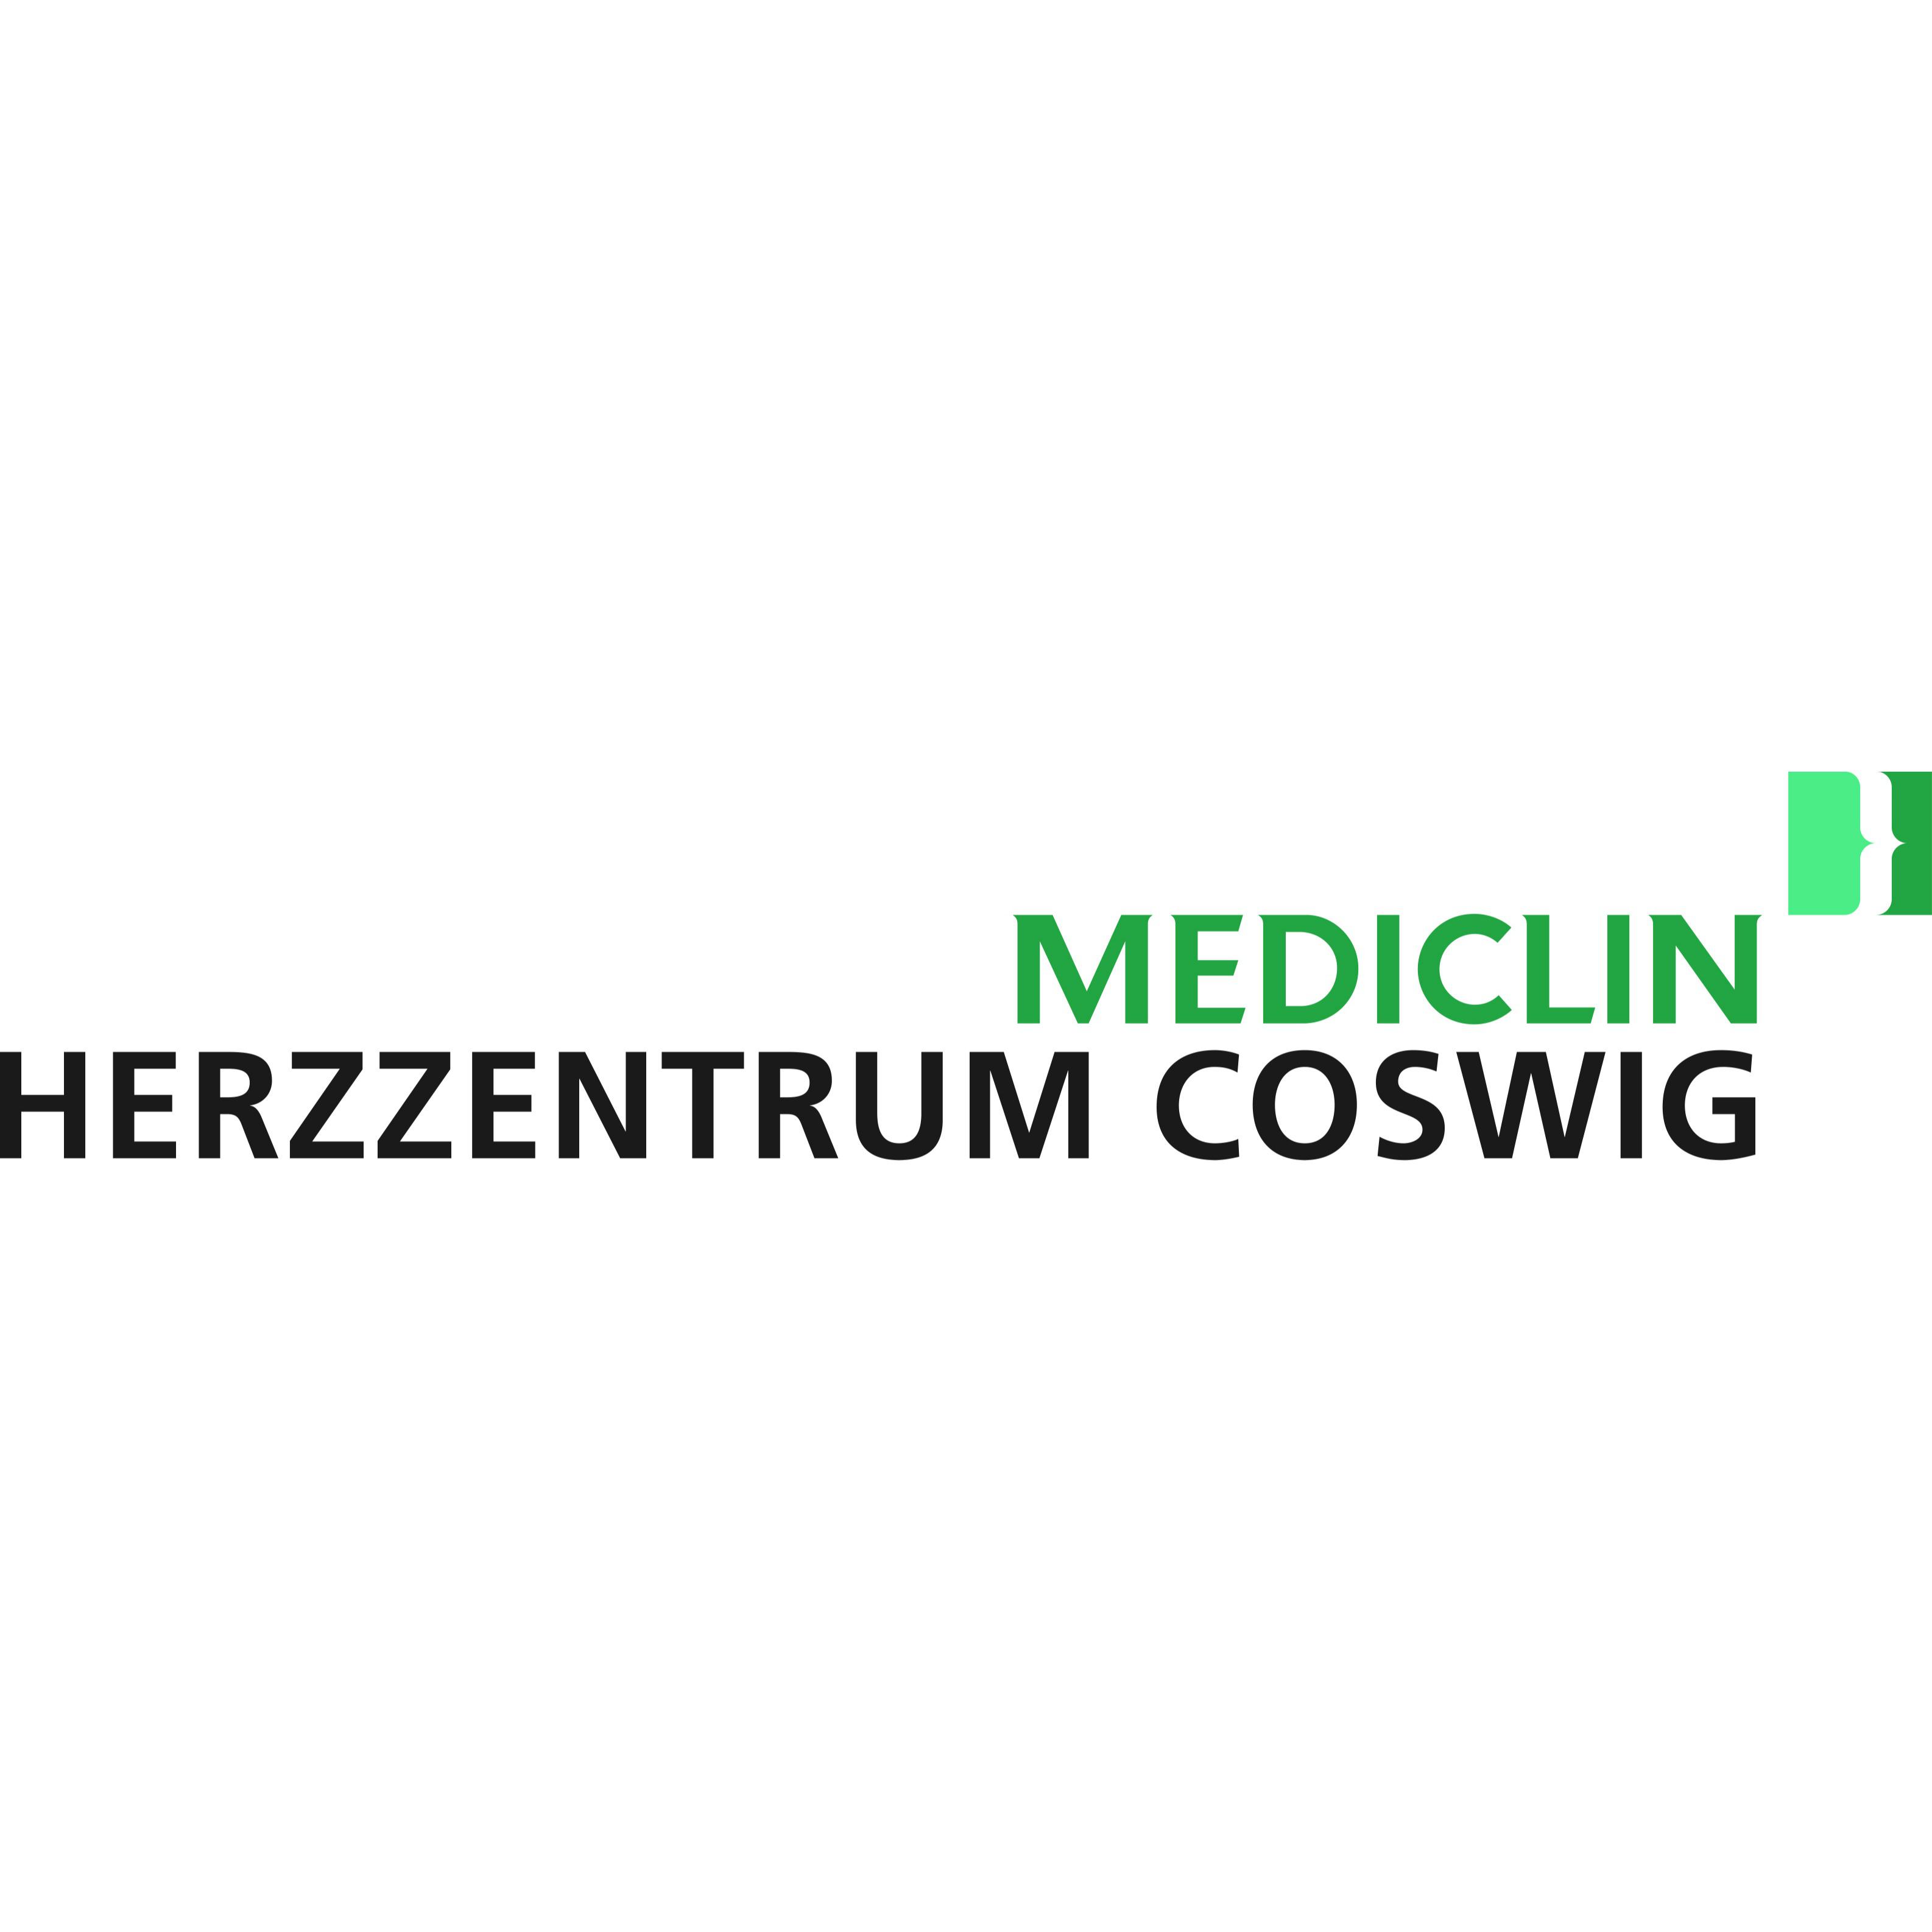 MEDICLIN Herzzentrum Coswig in Coswig in Anhalt - Logo